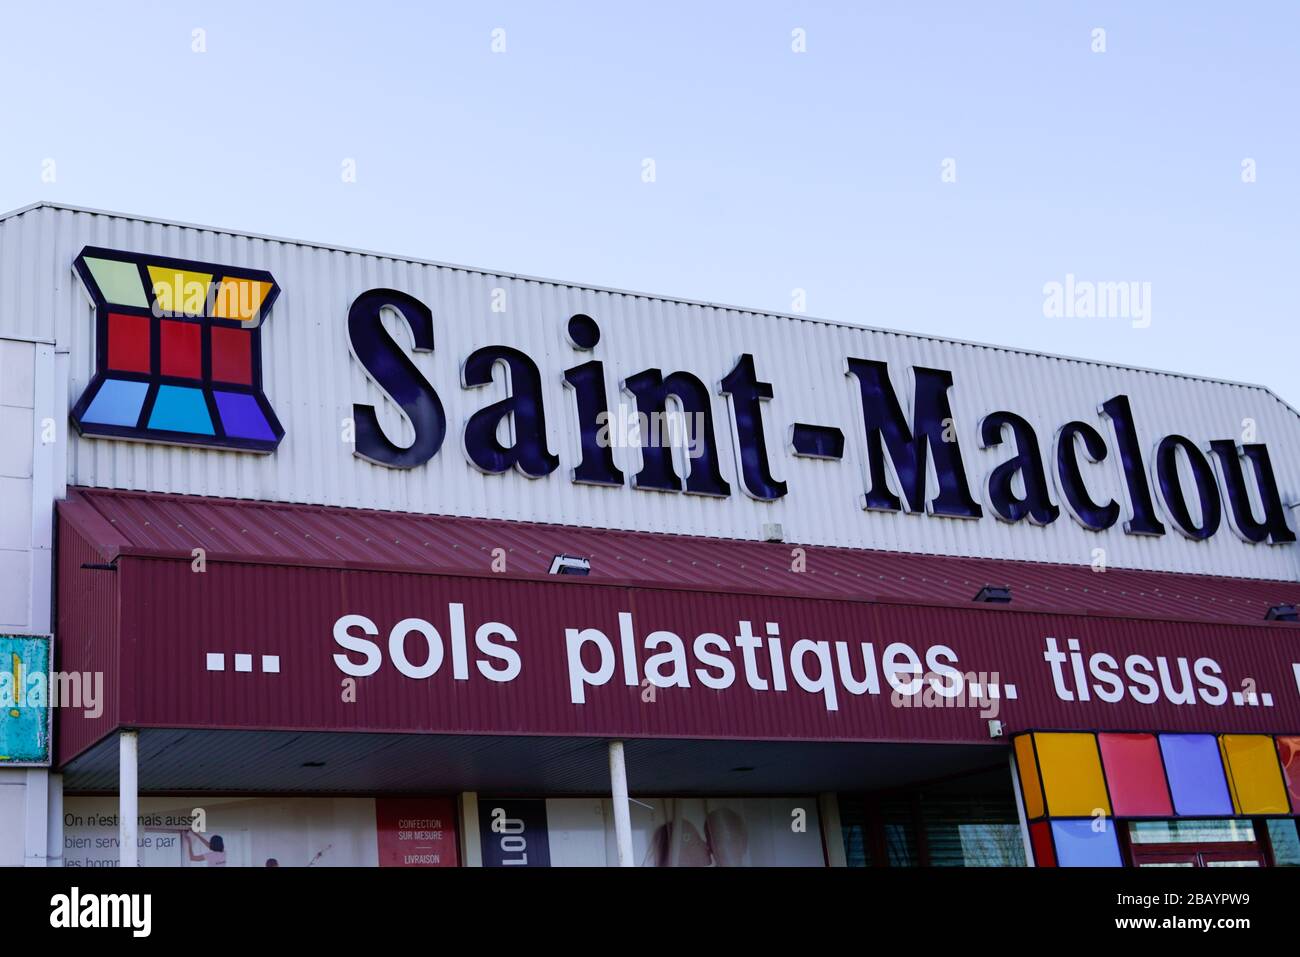 Bordeaux , Aquitaine / France - 03 15 2020 : Saint-Maclou store chain brand logo shop in france Stock Photo